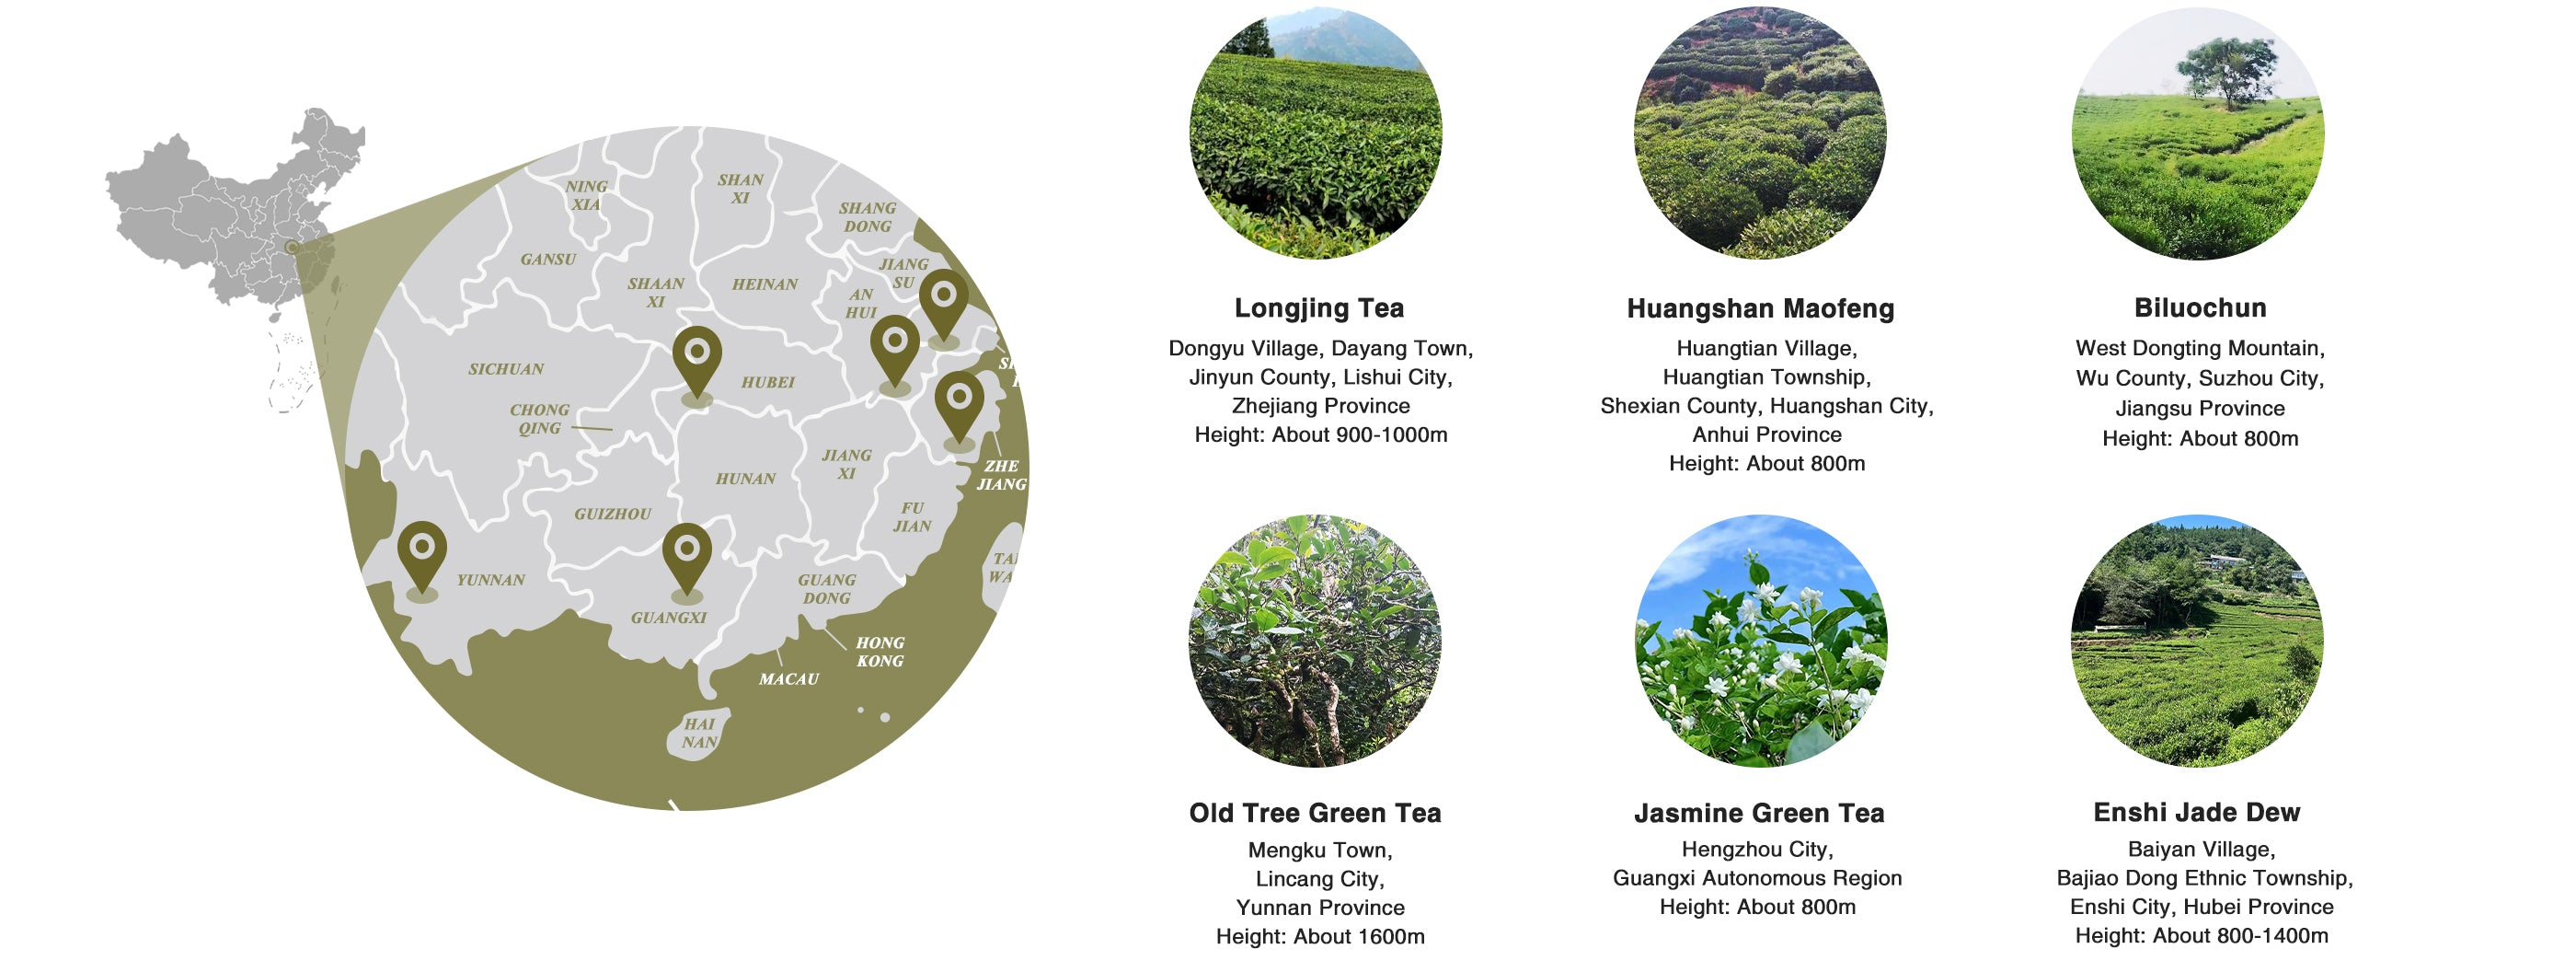 Information-on-the-origin-and-altitude-of-green-tea-loose-leaf-tea